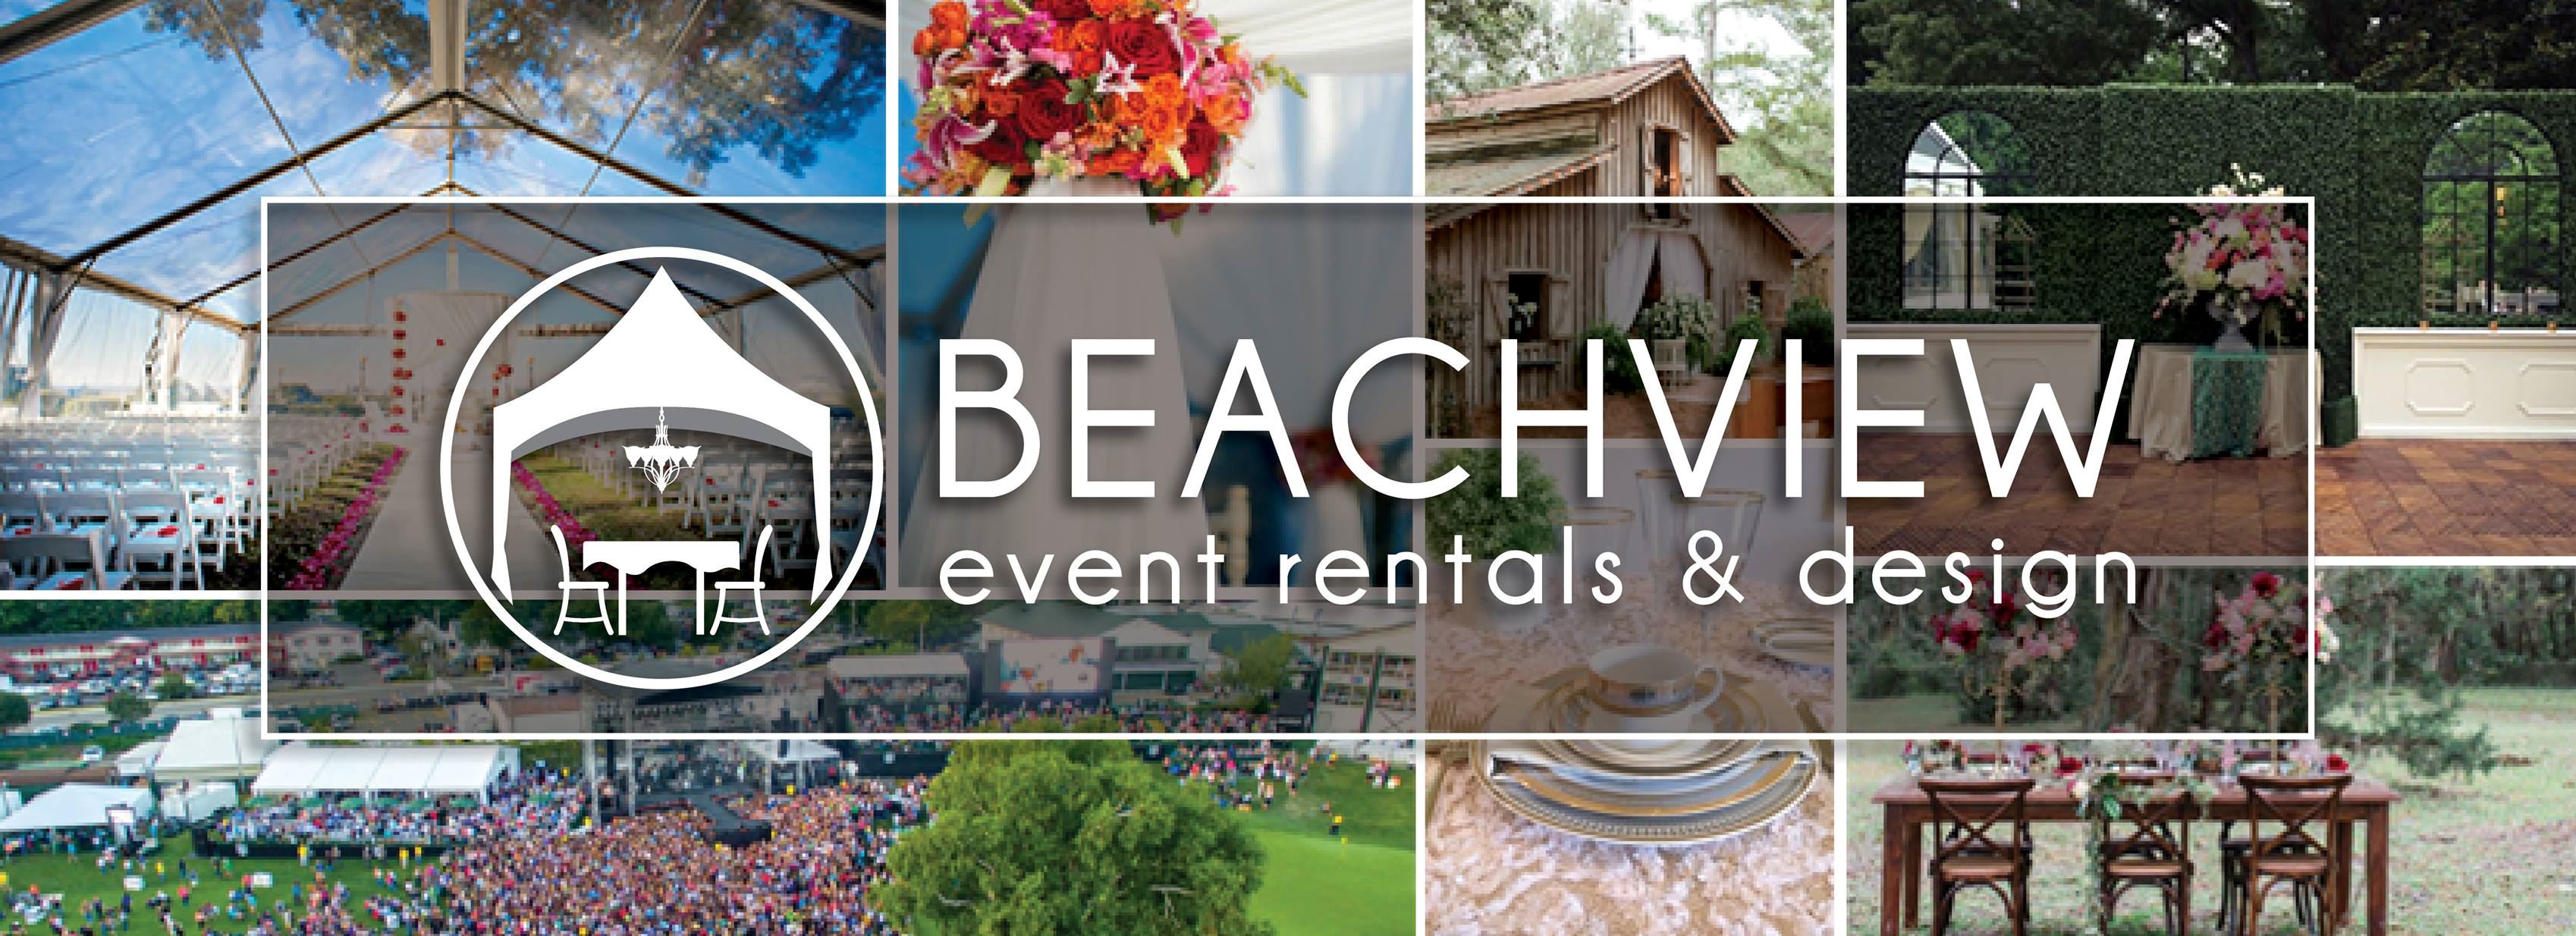 Beachview Event Rentals & Design Jacksonville - 1